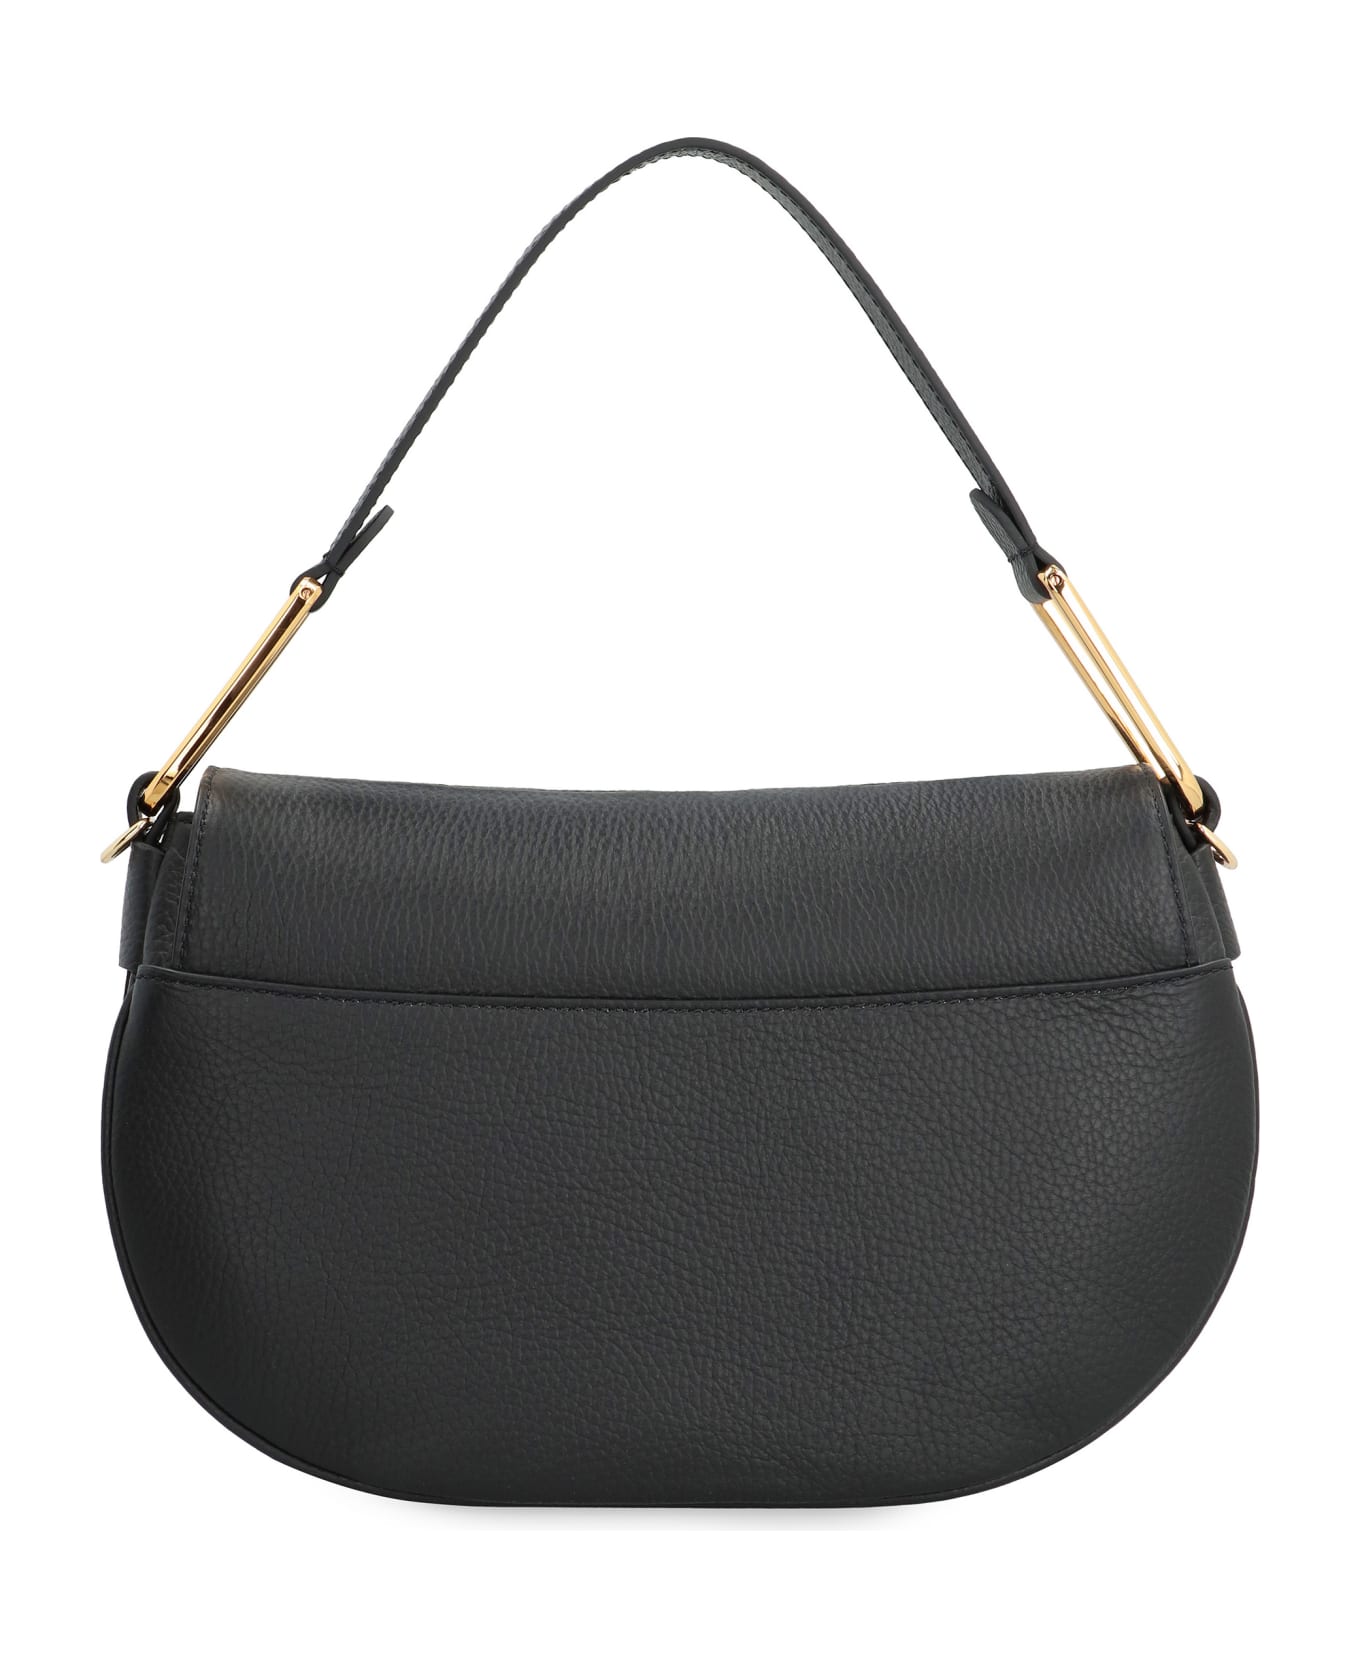 Coccinelle Magie Soft Leather Handbag - black